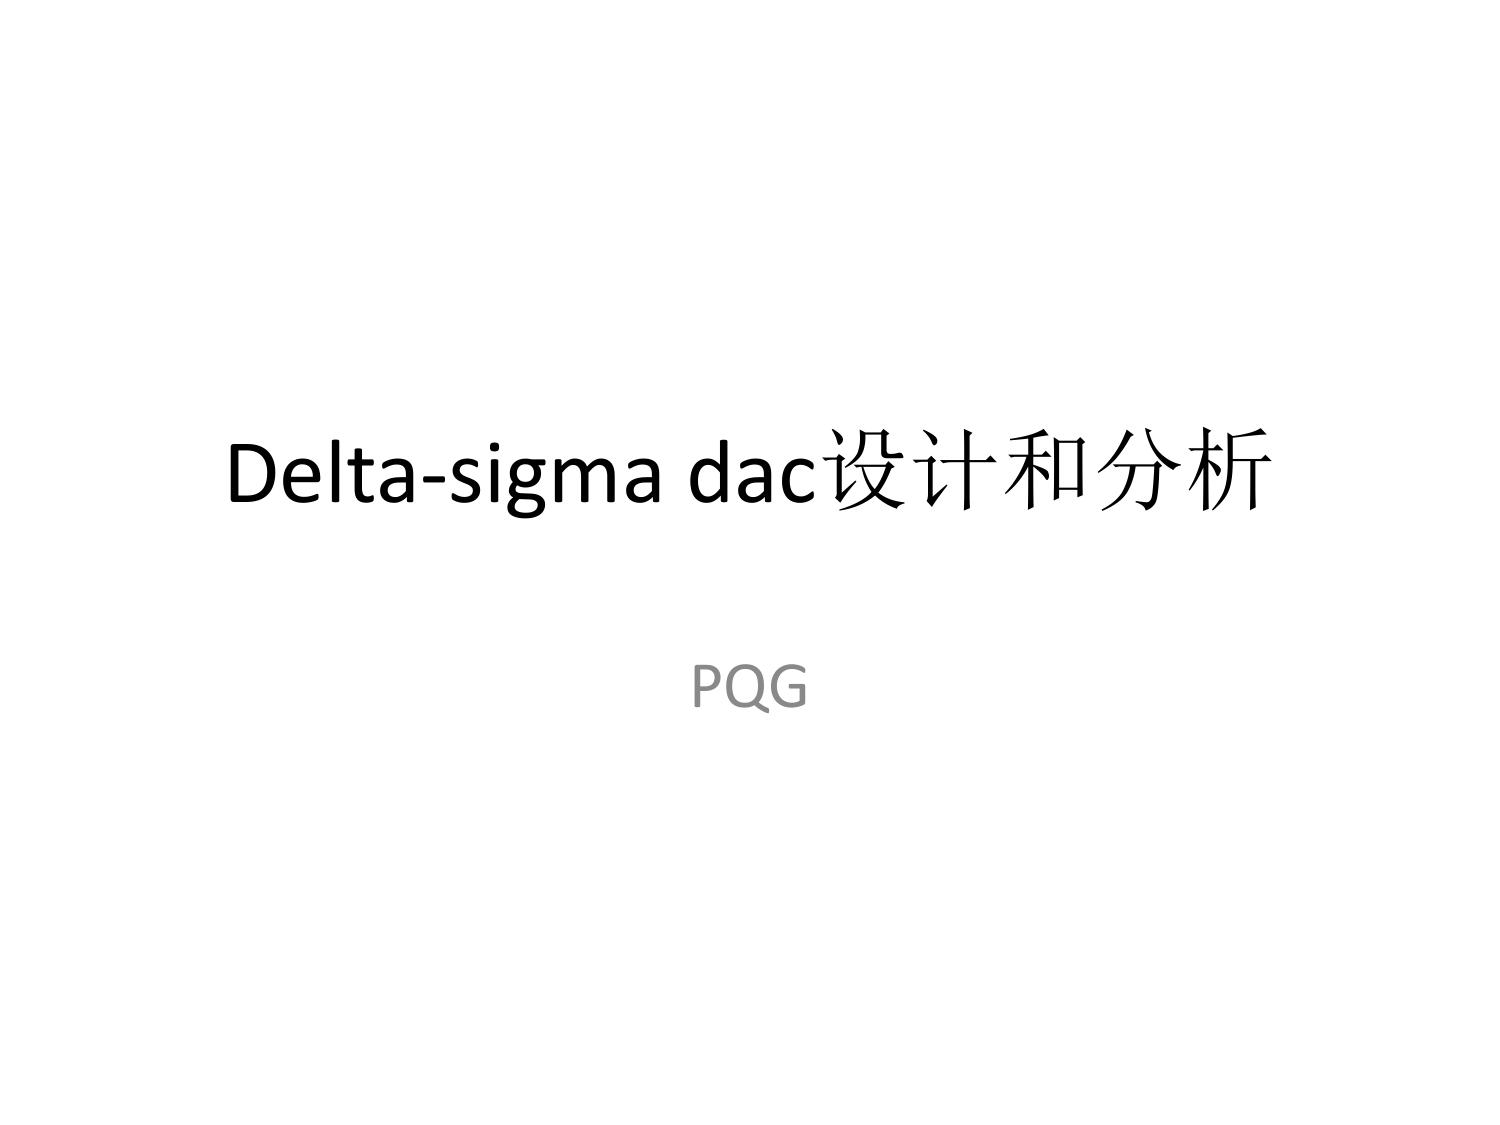 Delta-sigma dac设计和分析